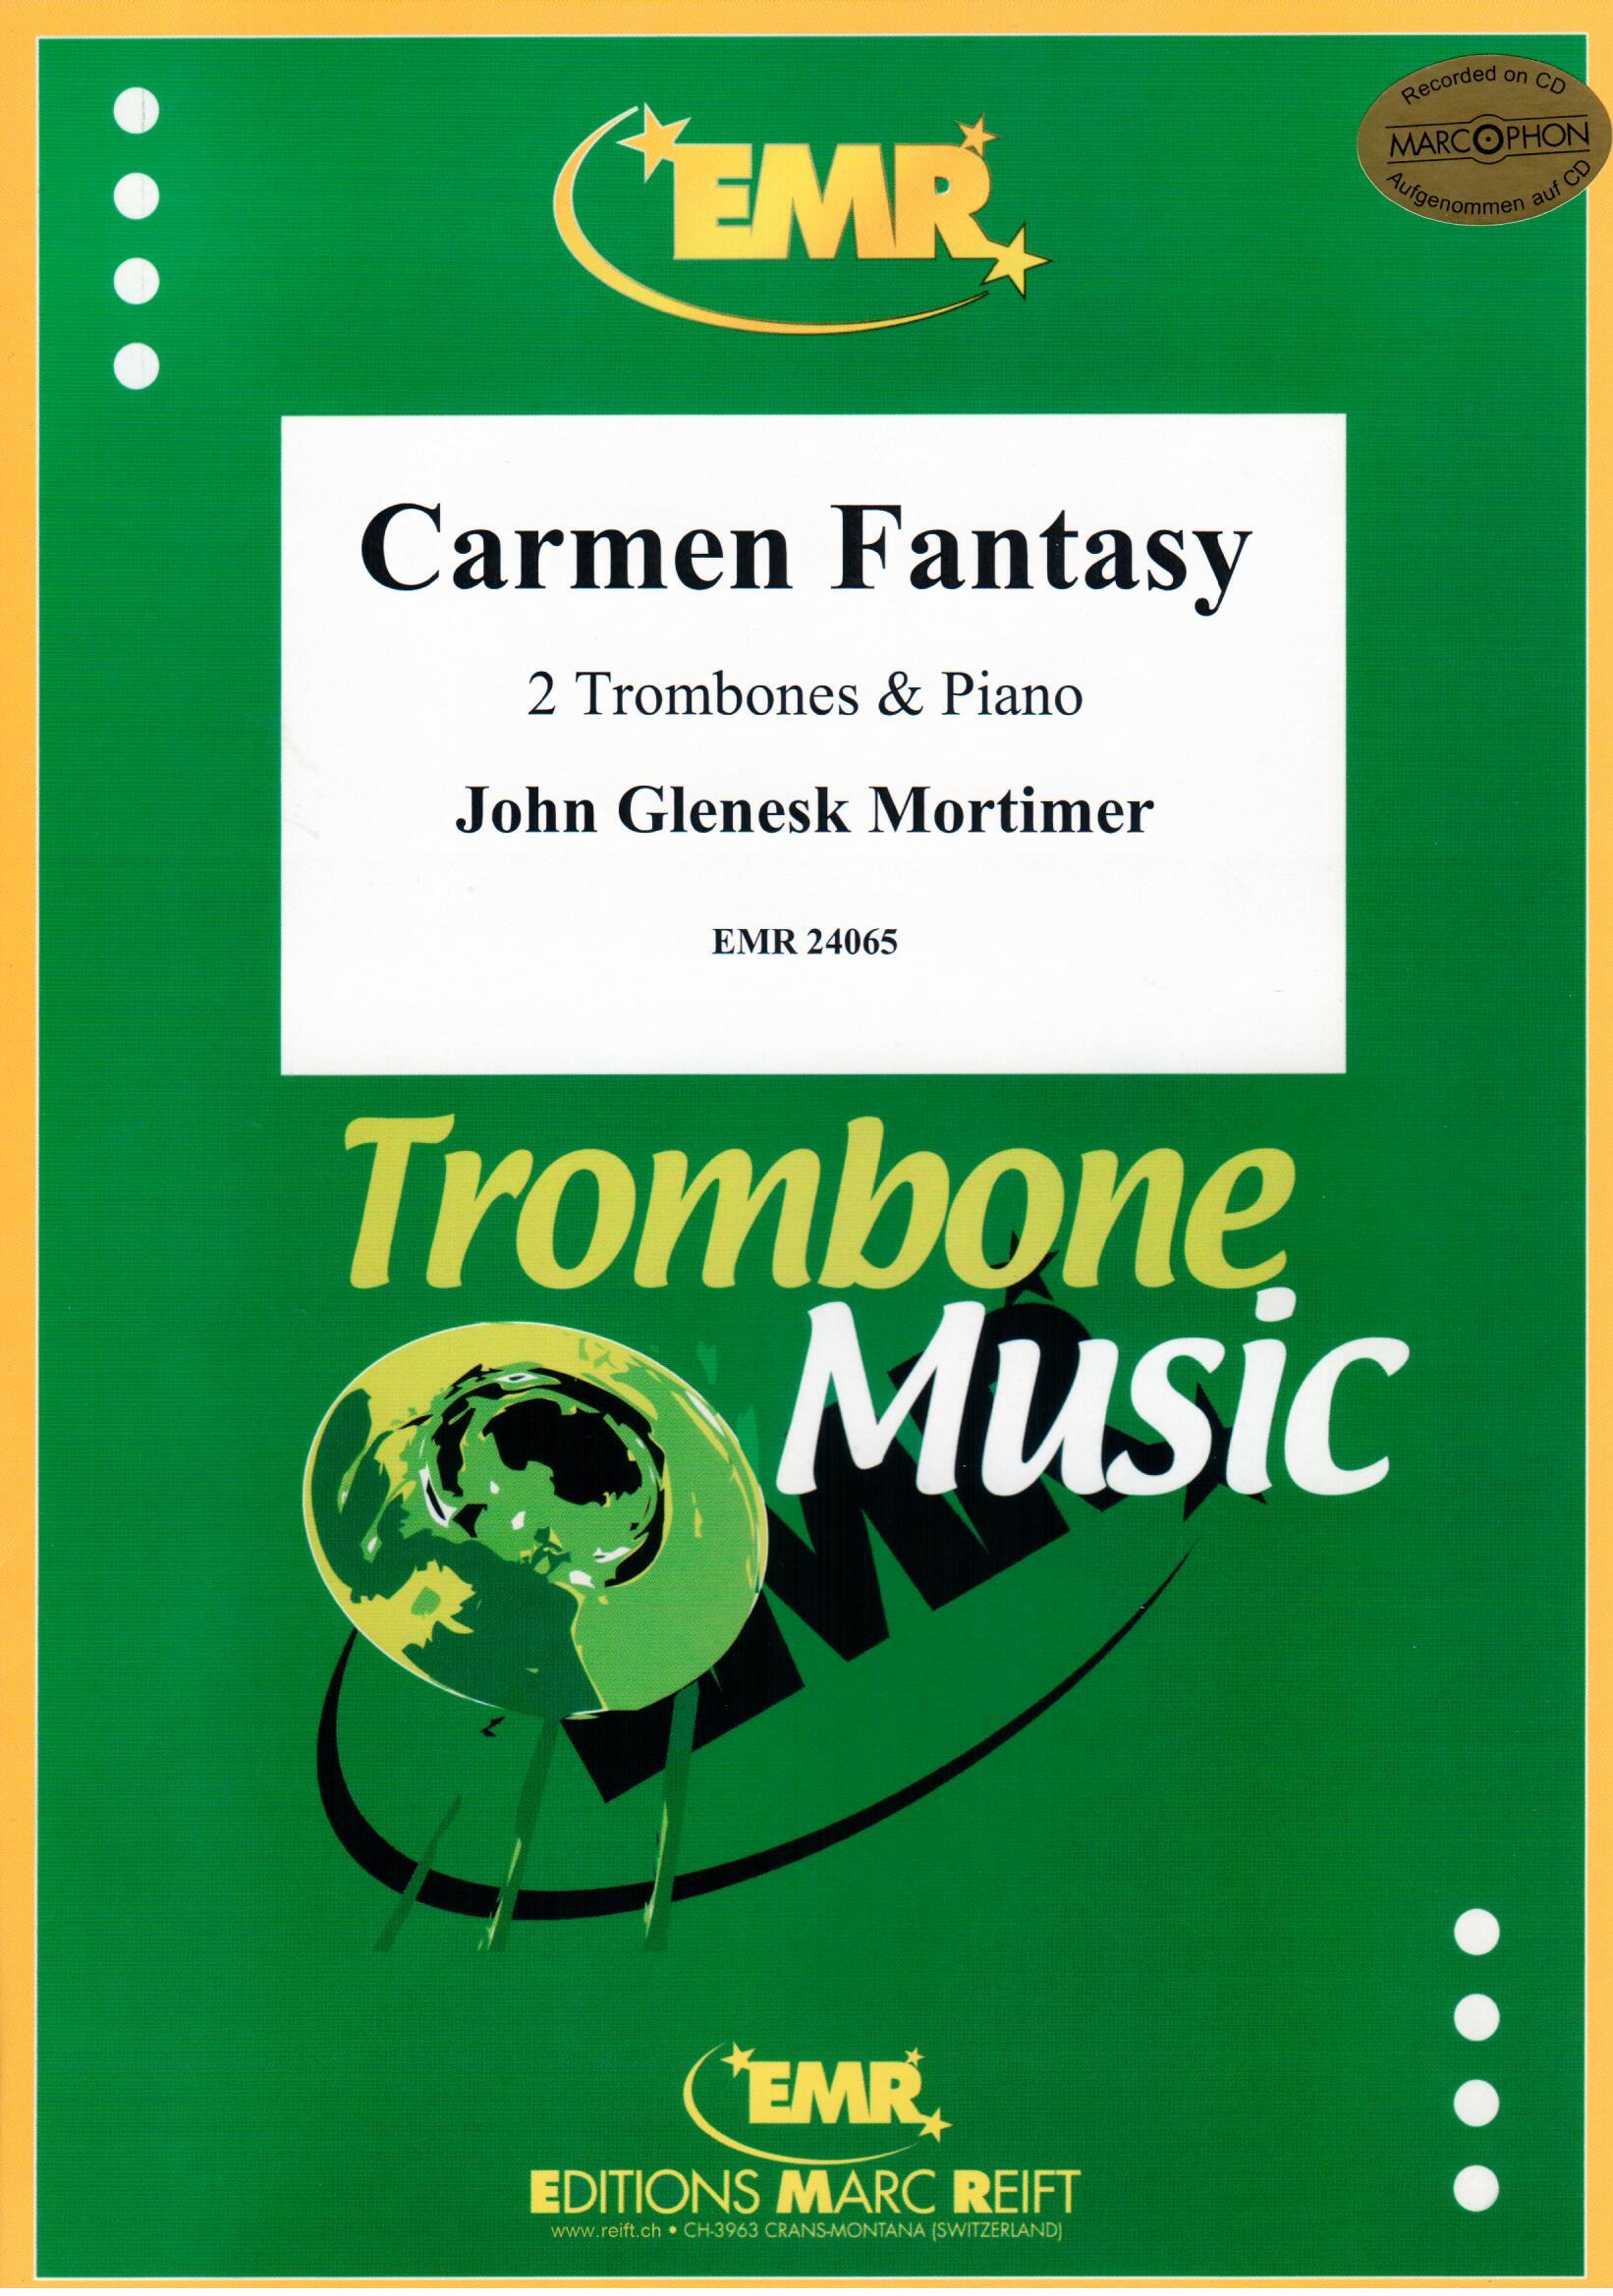 CARMEN FANTASY, SOLOS - Trombone